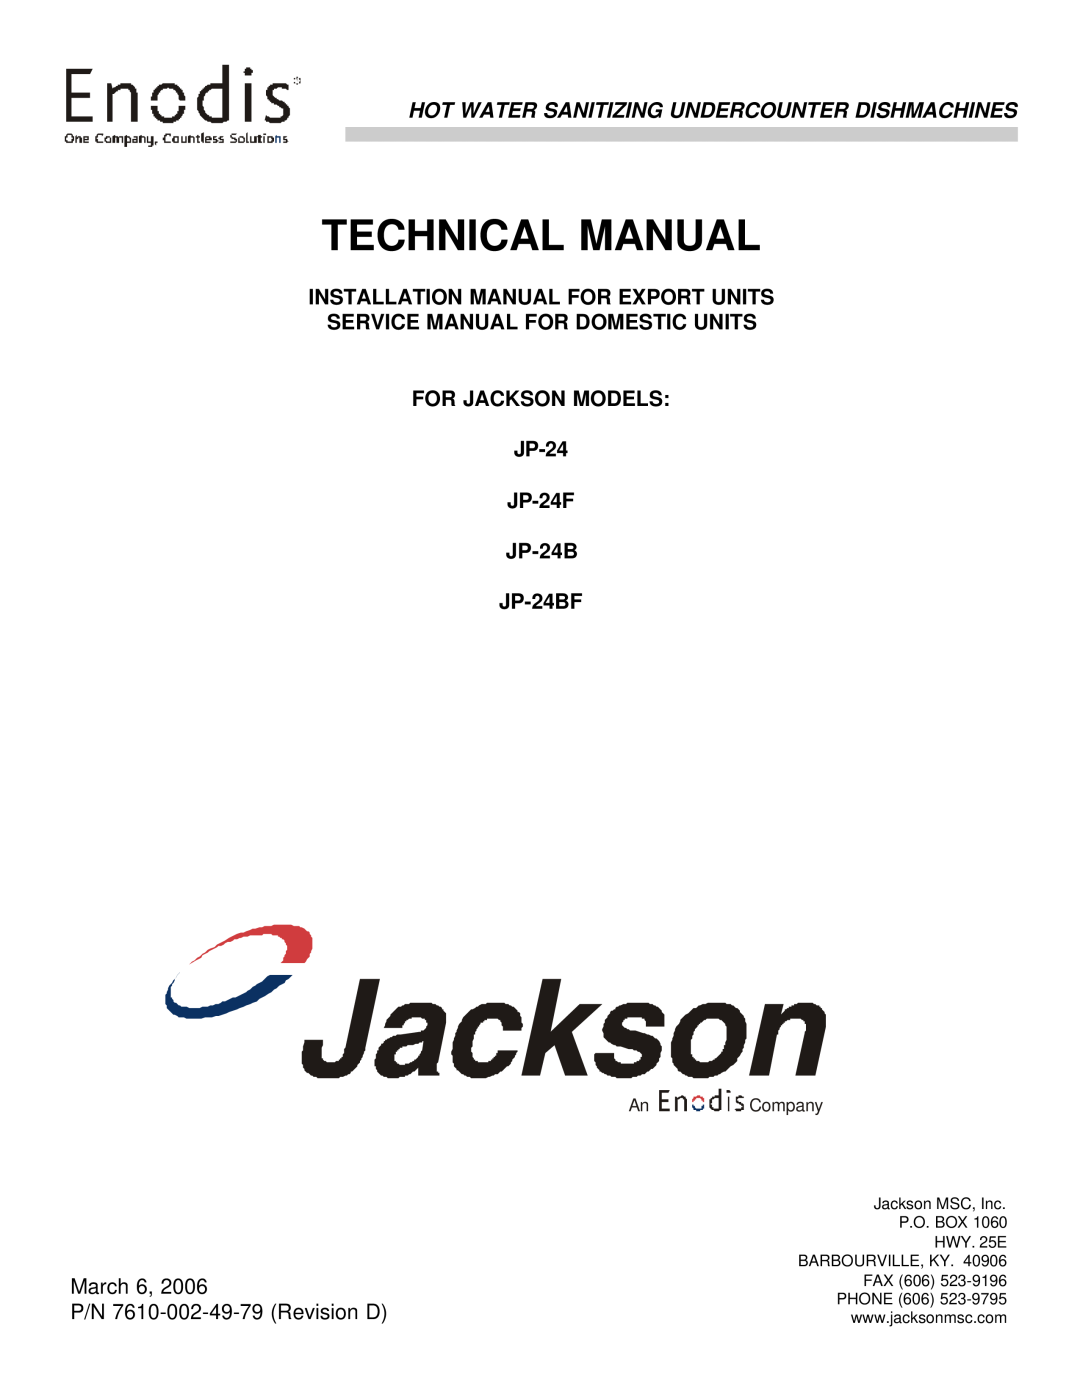 Jackson jp-24b technical manual Technical Manual, FOR JACKSON MODELS JP-24 JP-24F JP-24B JP-24BF, An Company 